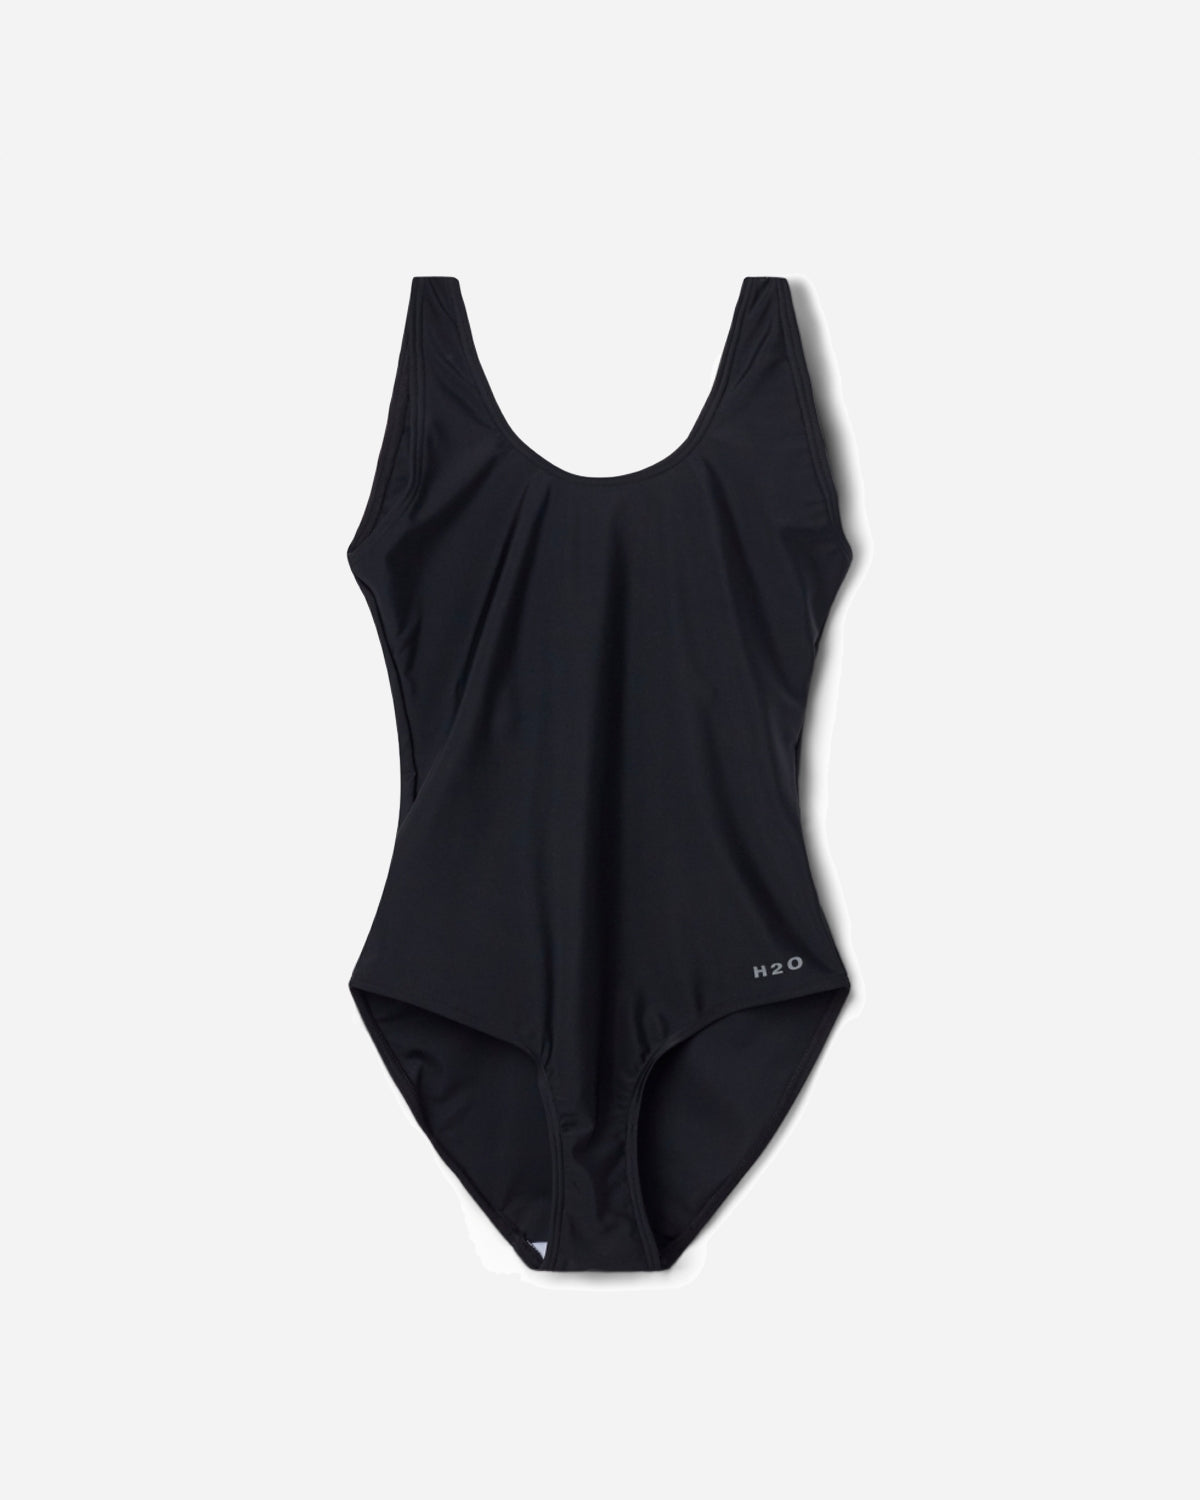 Tornø Swim Suit - Black